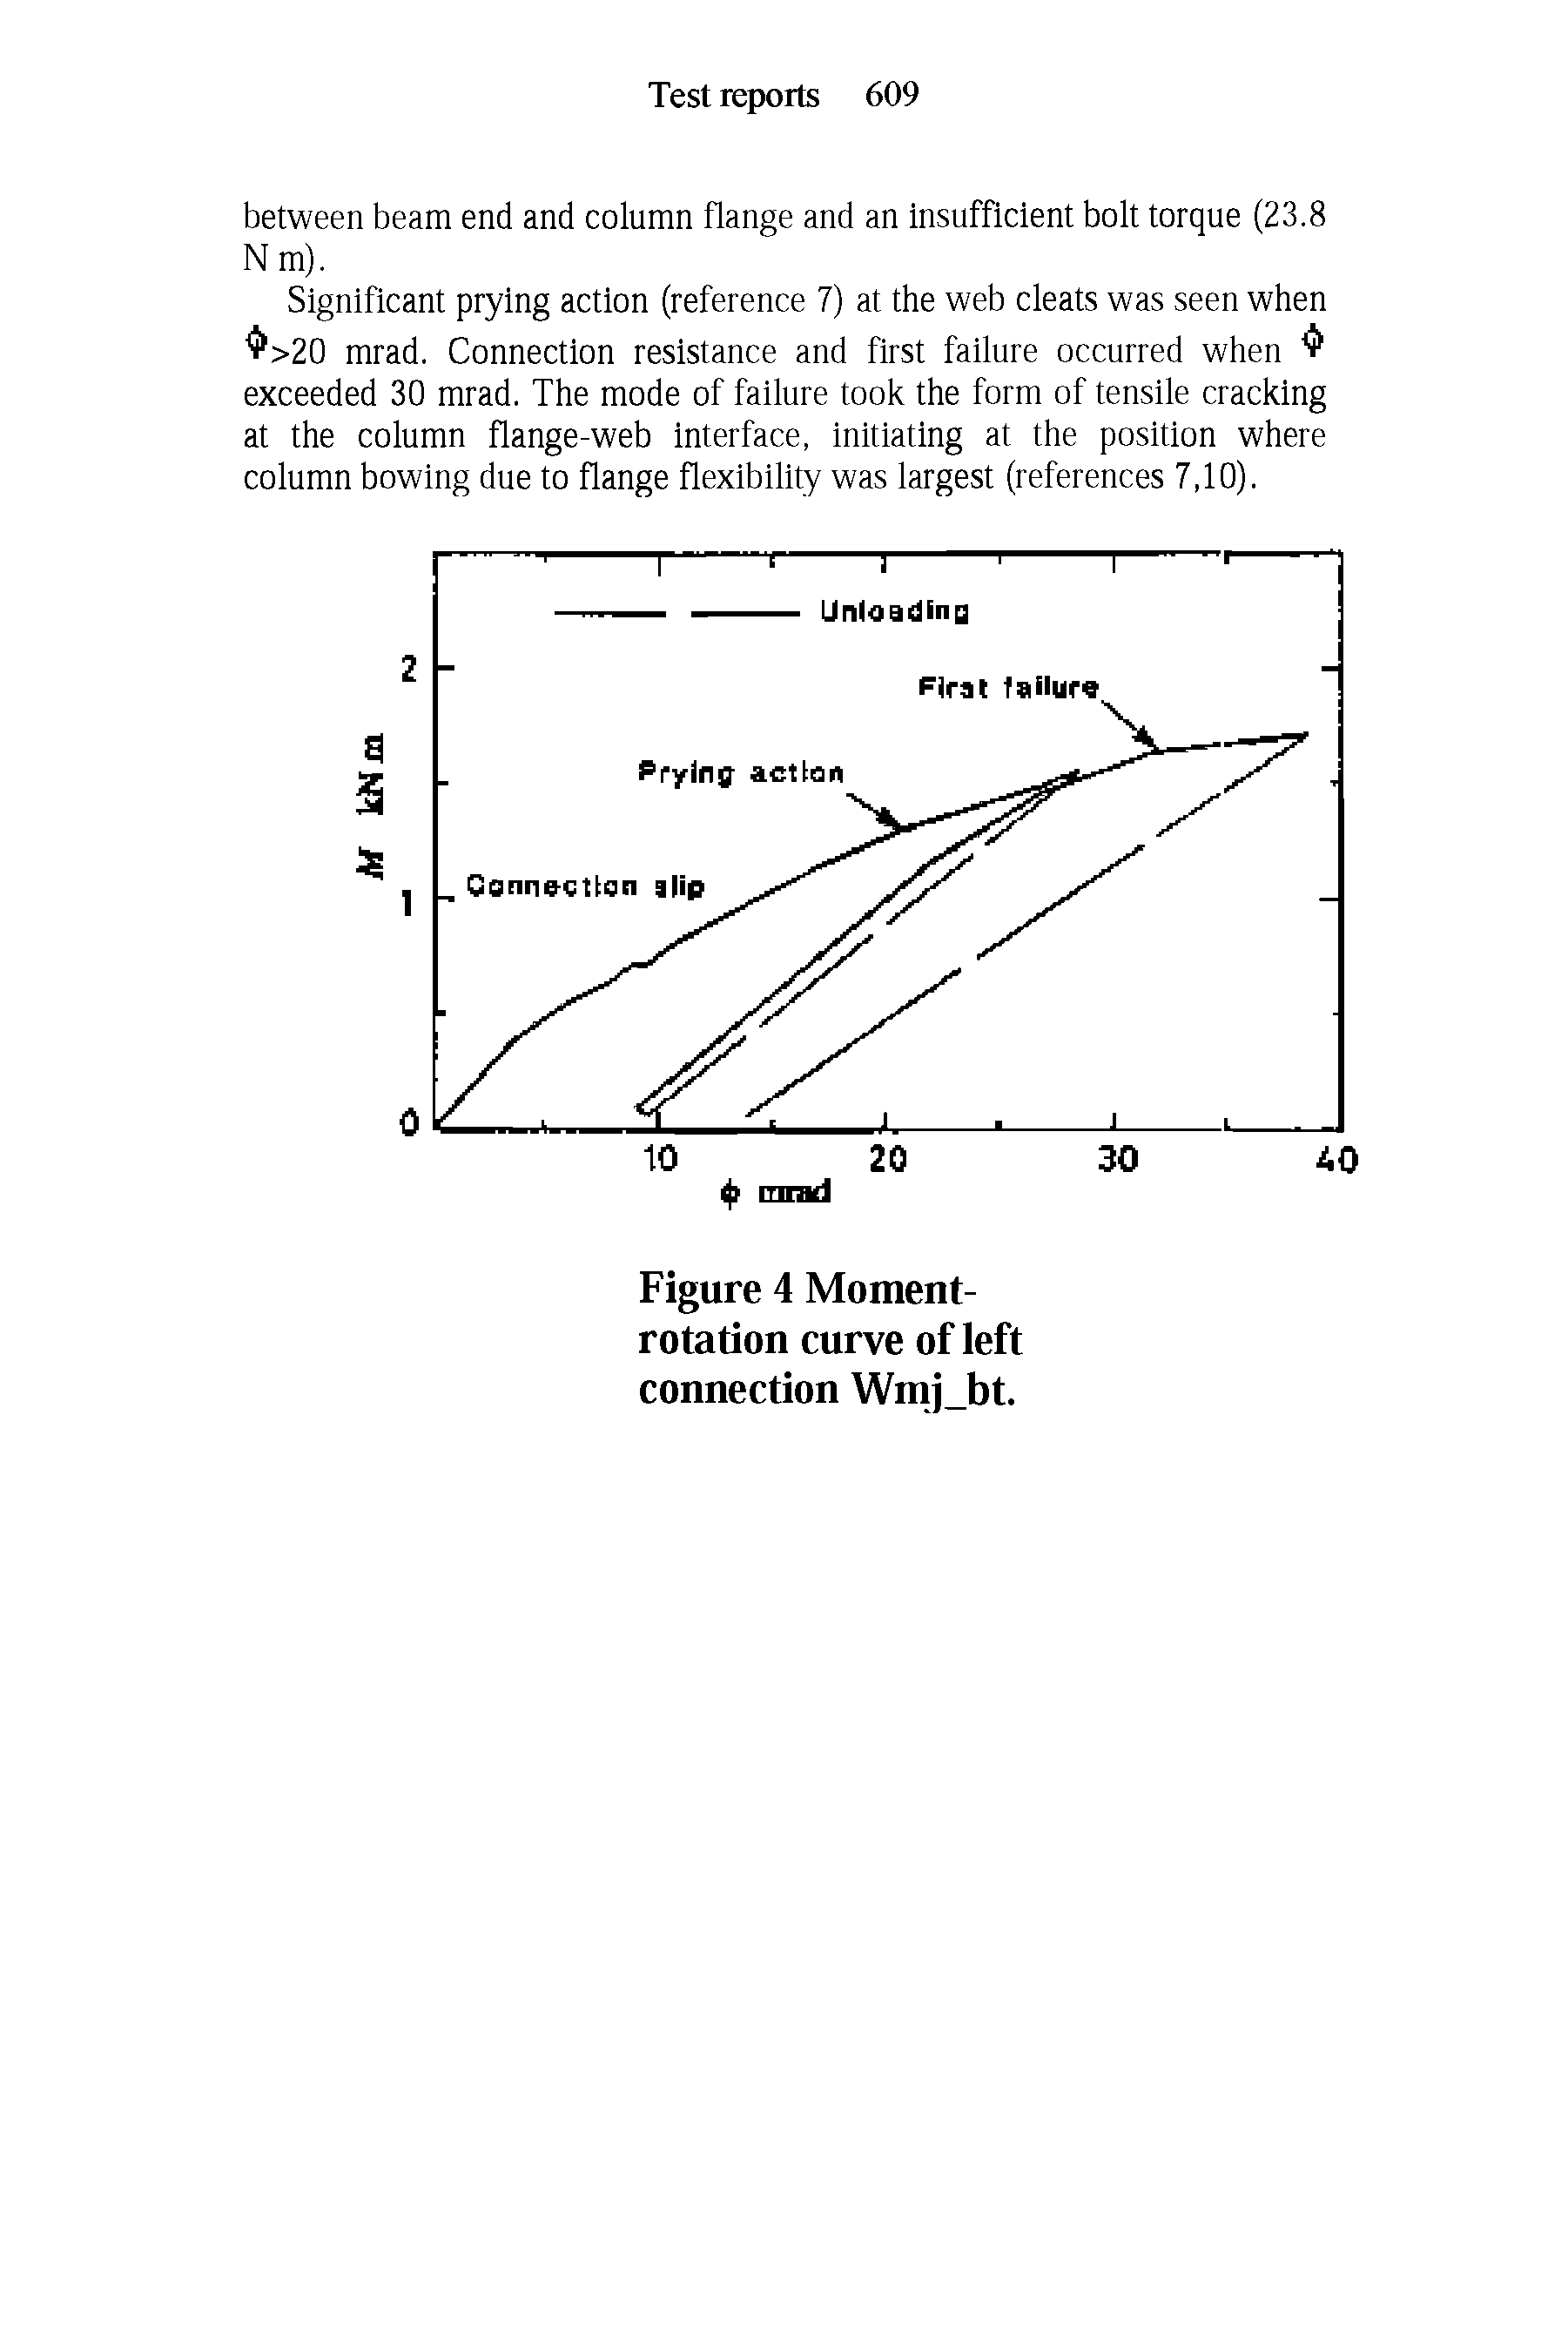 Figure 4 Moment-rotation curve of left connection Wnij bt.